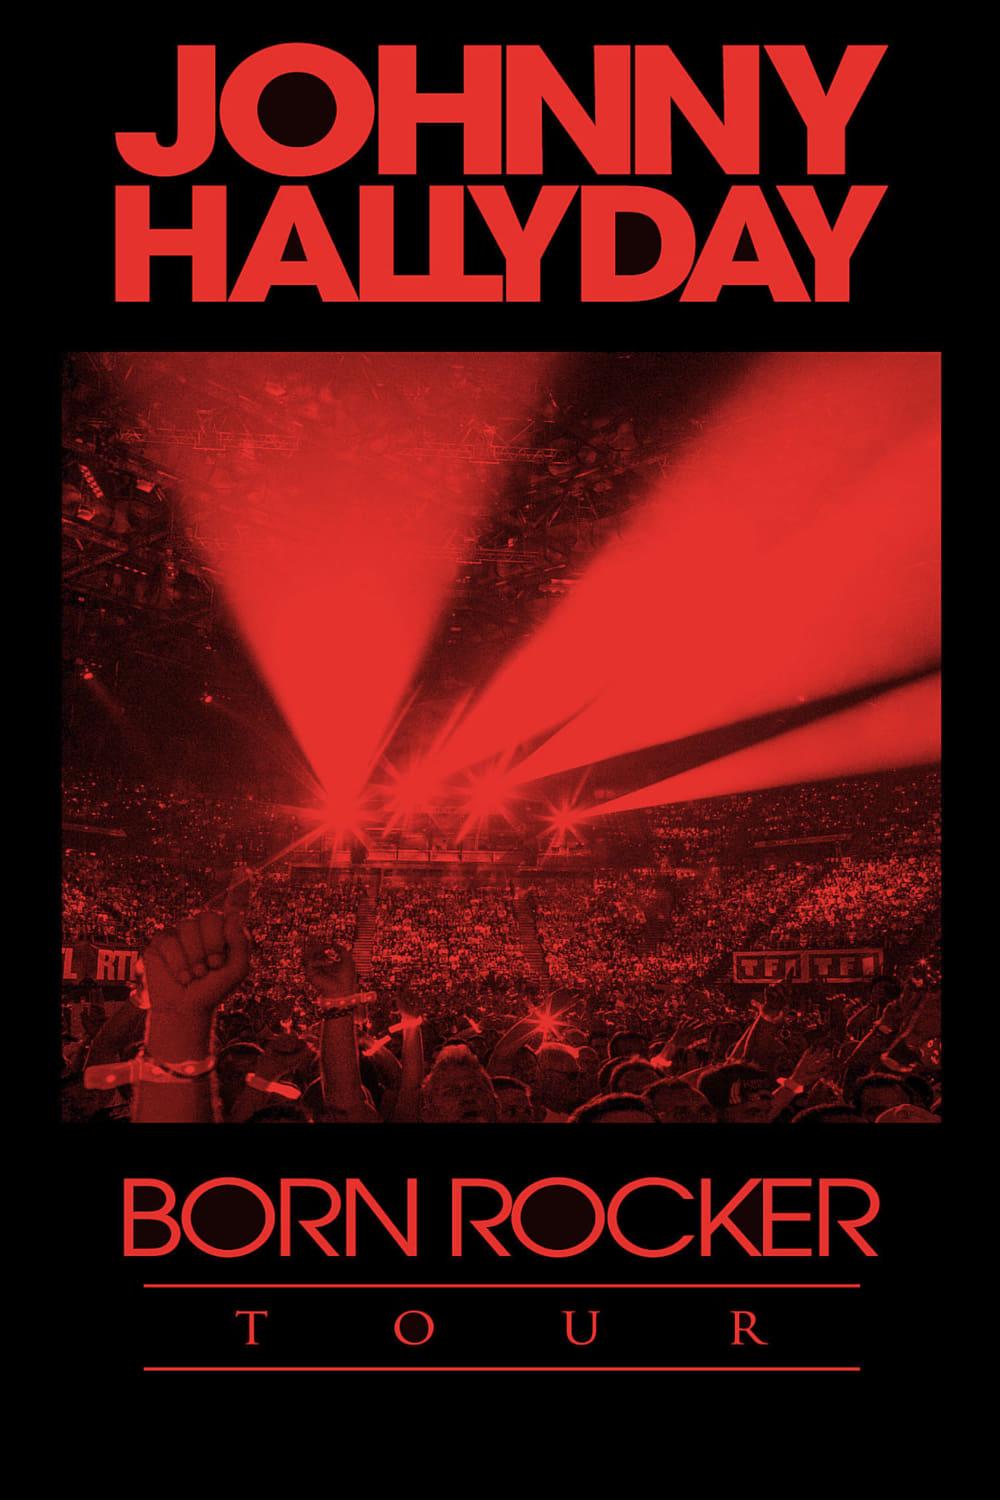 Johnny Hallyday - Born Rocker Tour poster